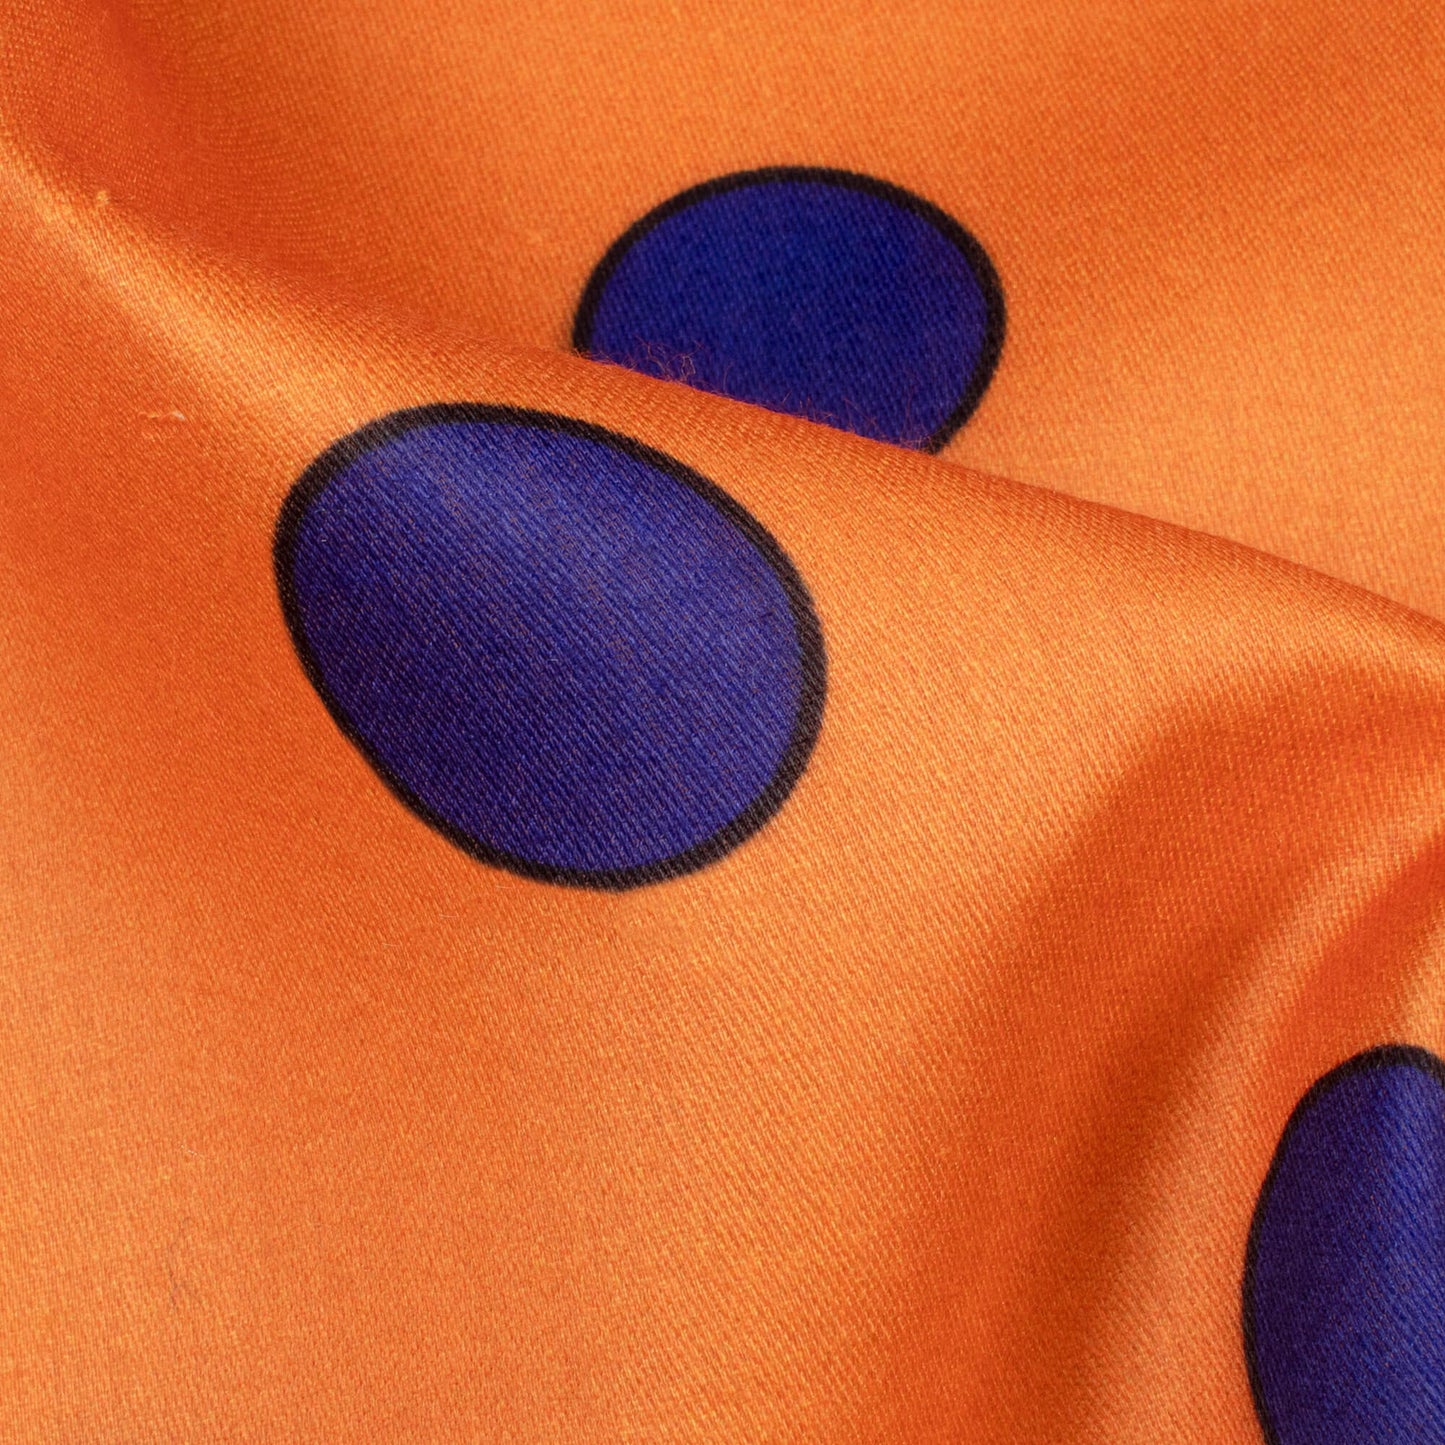 Ochre Orange And Navy Blue Polka Dots Pattern Digital Print Poly Glazed Cotton Fabric